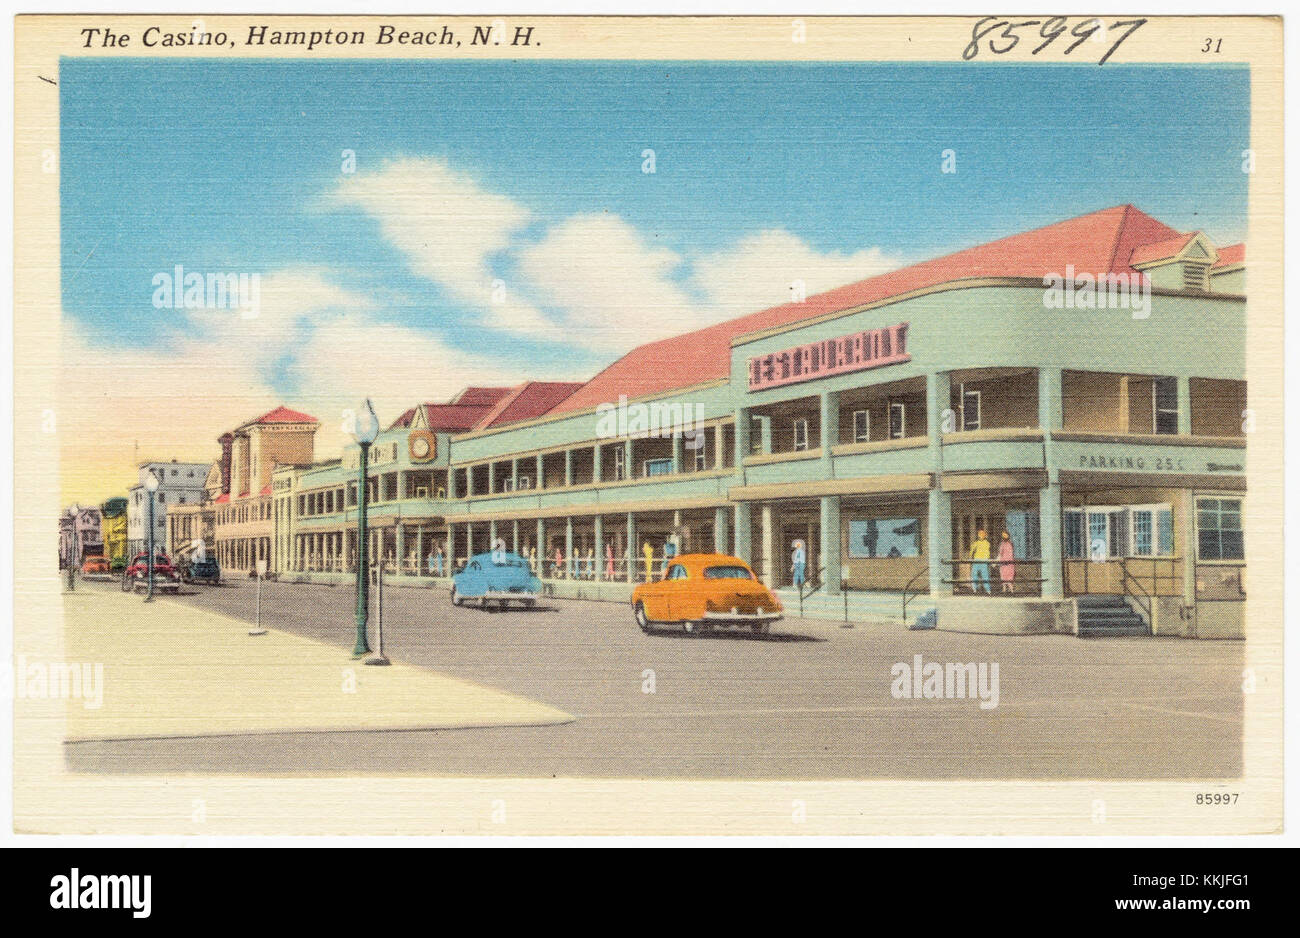 The Casino, Hampton Beach, N.H (85997) Foto Stock